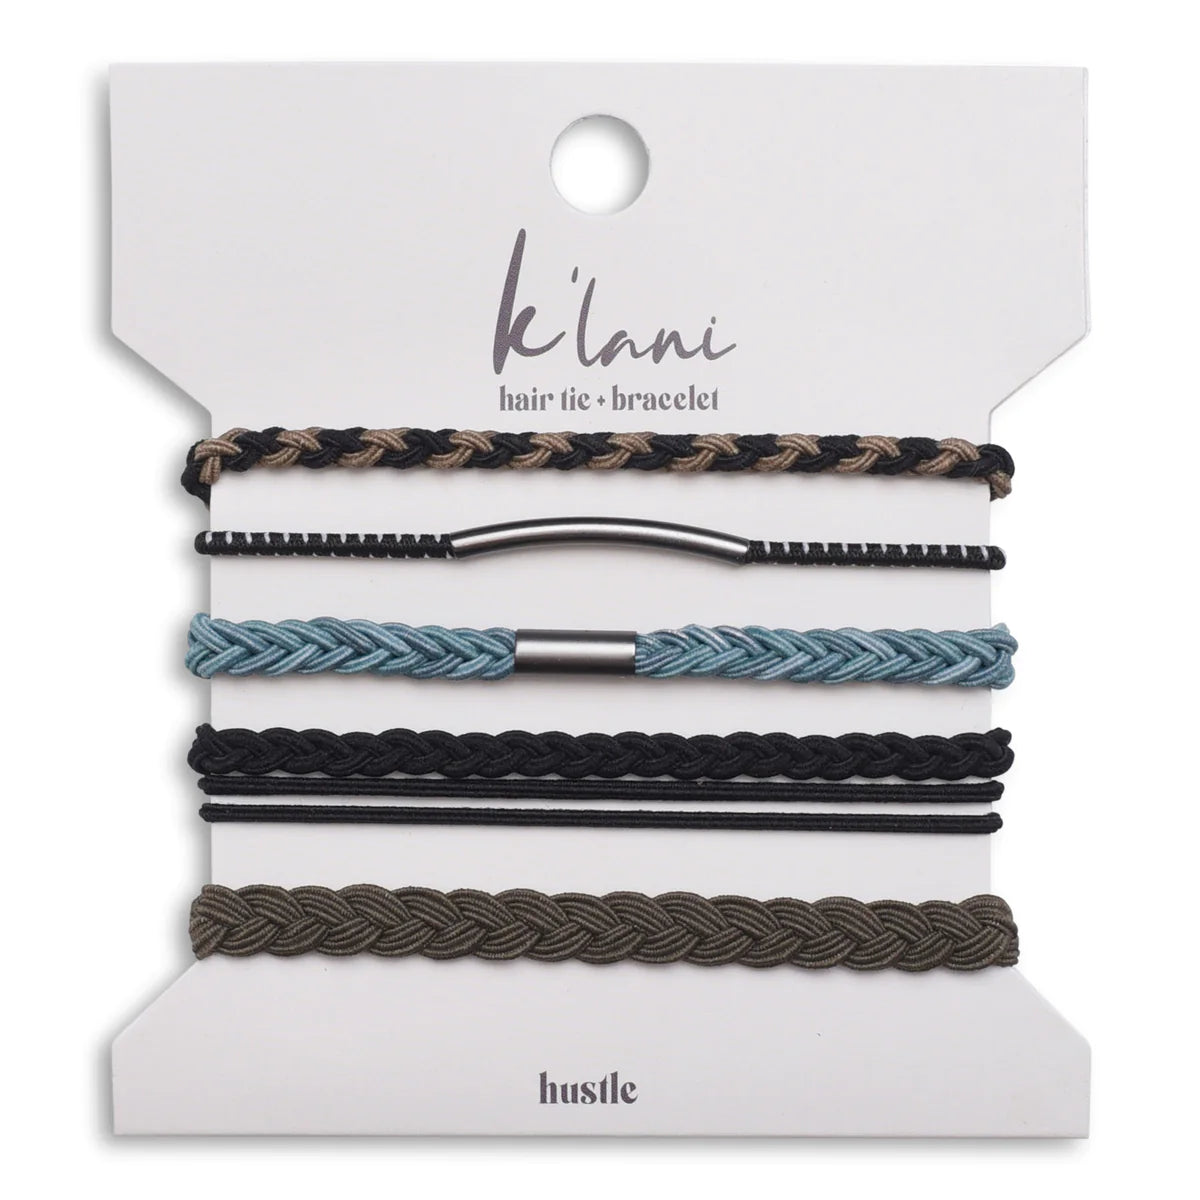 K'lani Hair Tie Bracelet - Hustle